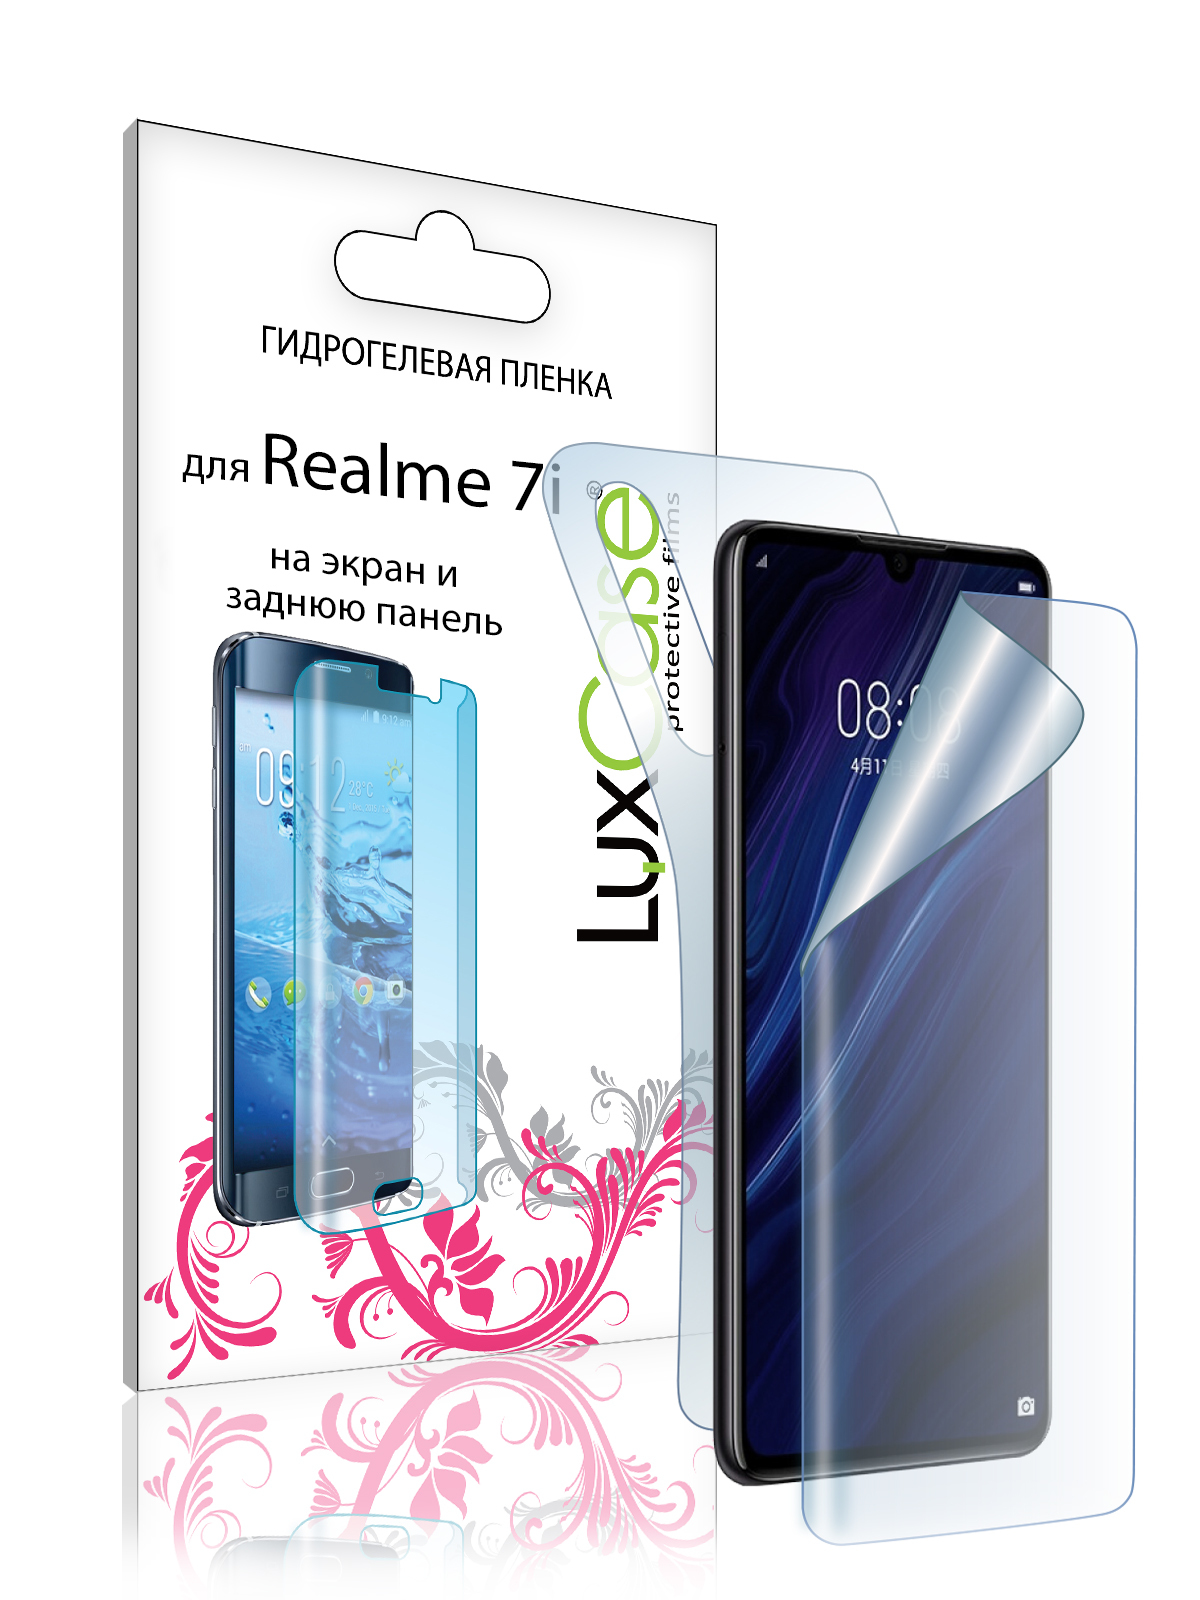 Пленка гидрогелевая LuxCase для Realme 7i 0.14mm Front and Back Transparent 86593 гидрогелевая пленка luxcase для realme 7i 0 14mm front and back transparent 86593